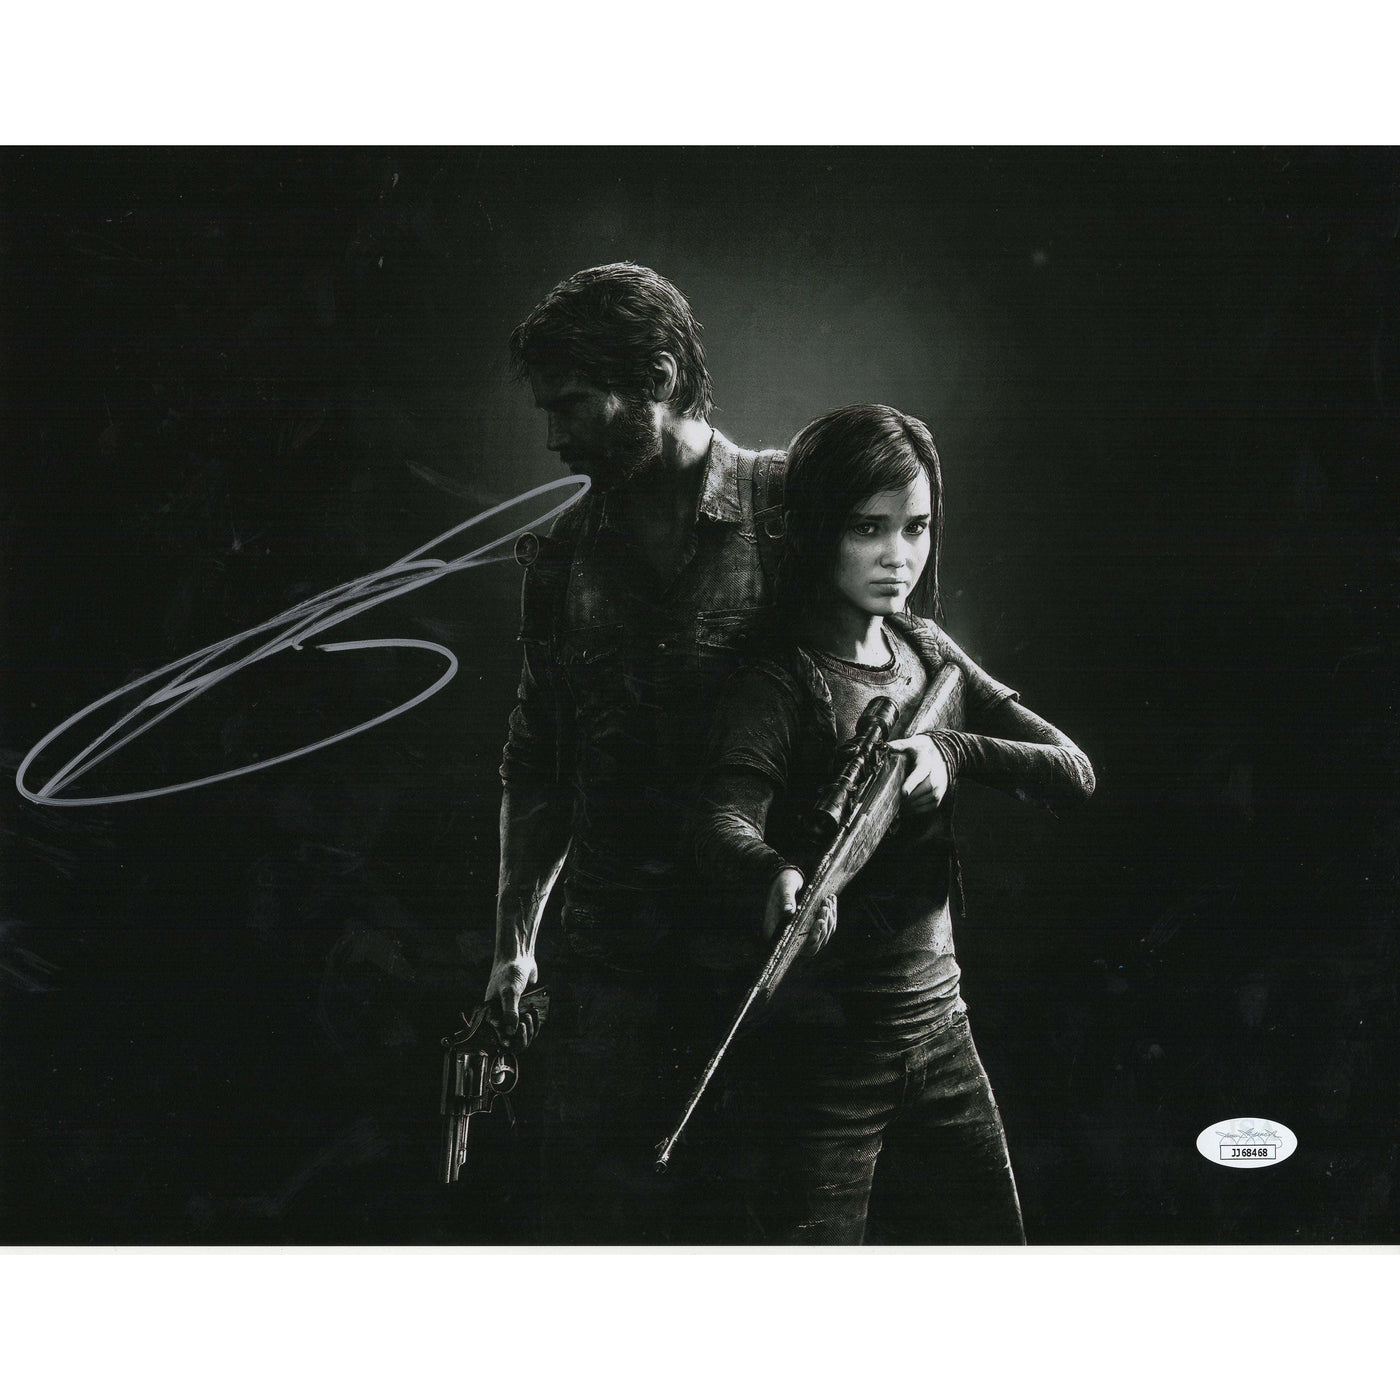 Troy Baker Autograph 11x14 Photo The Last of Us Signed JSA COA